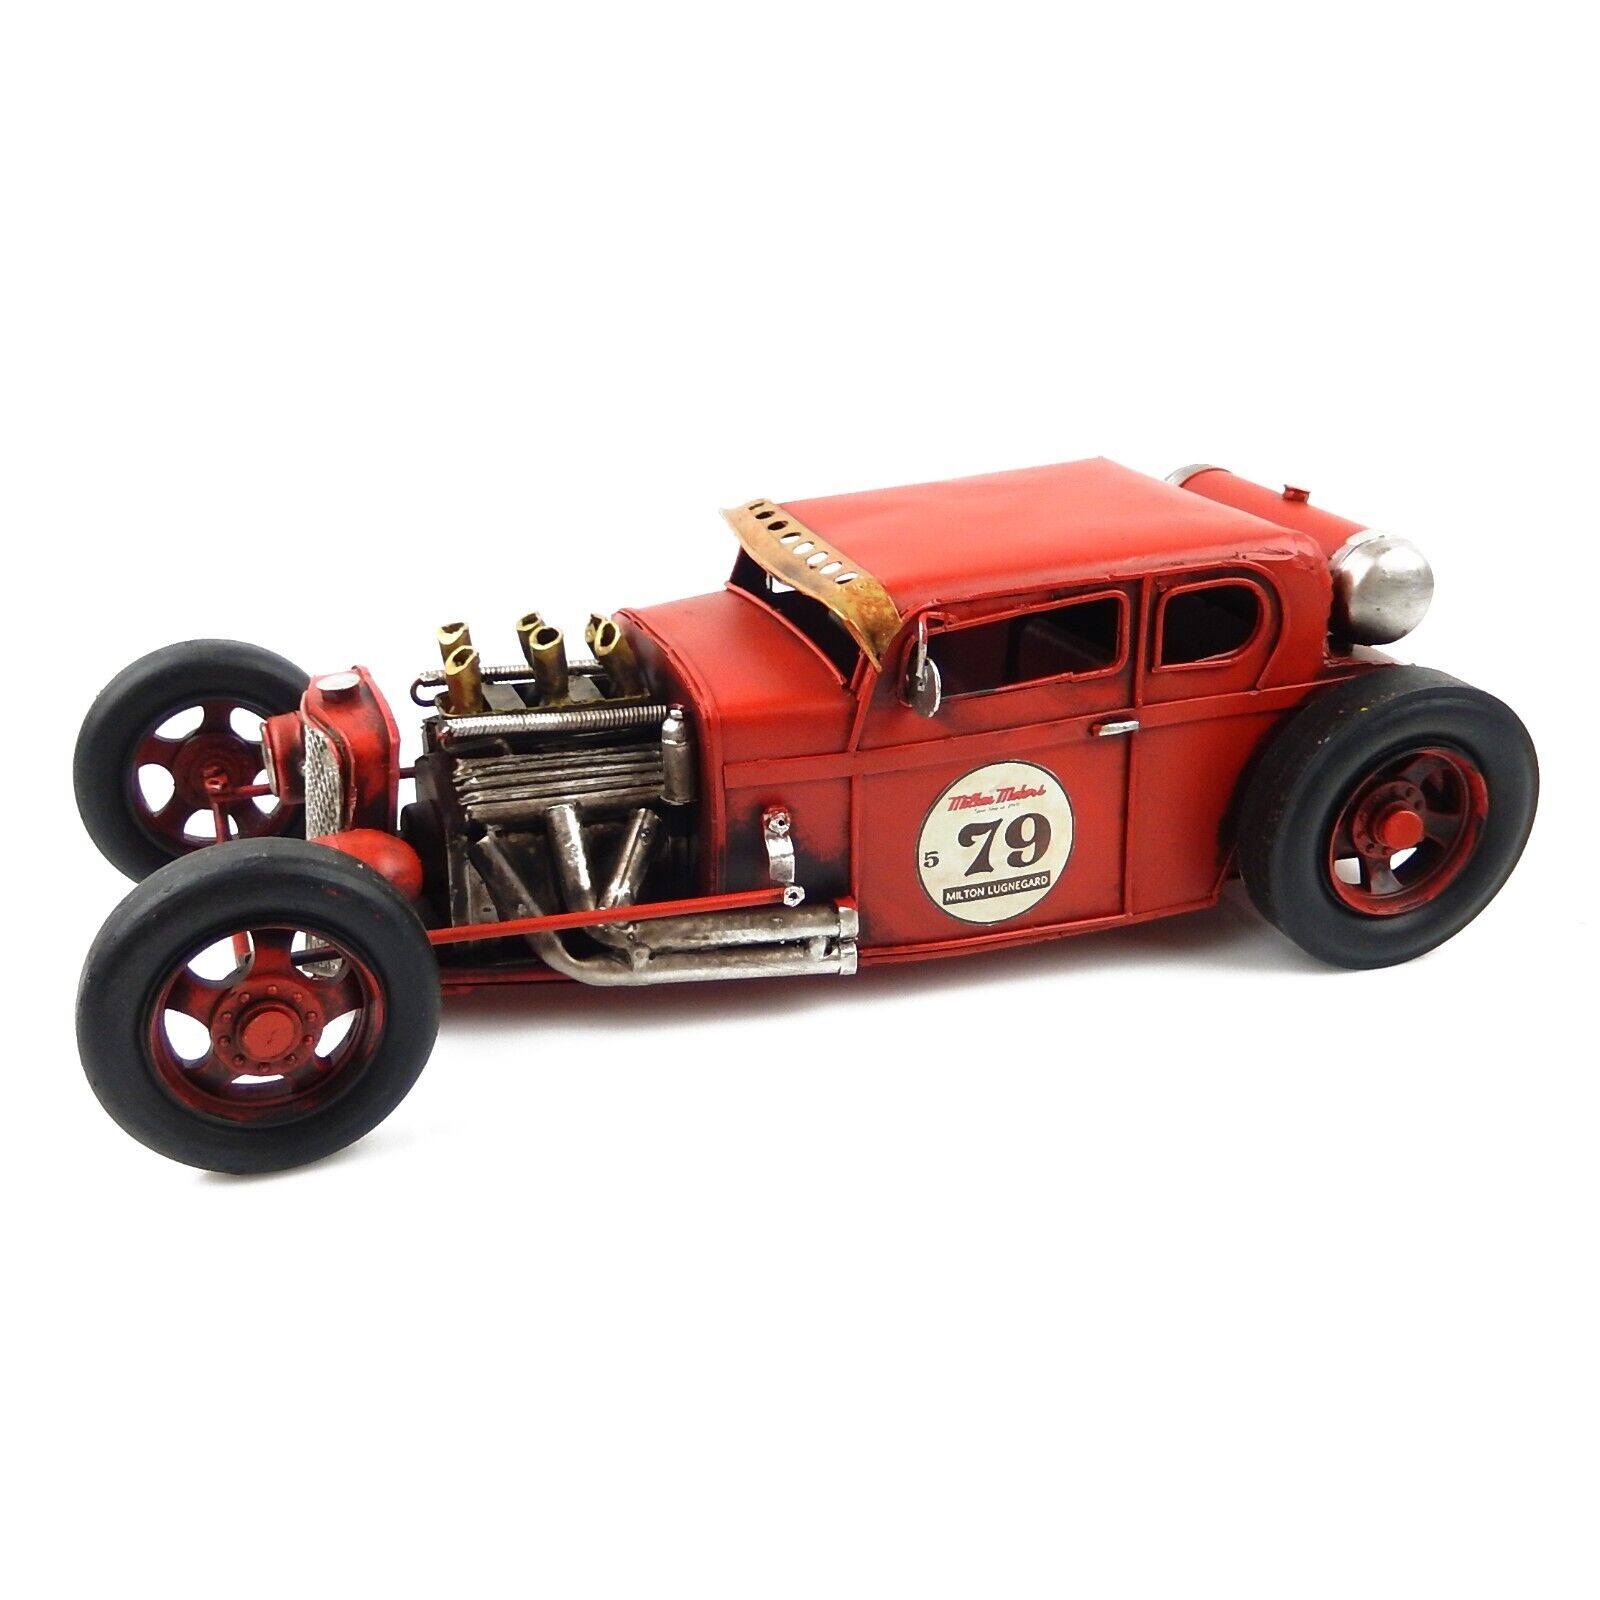 Tin Metal Red Hot Rod Racing Car Figurine Garage Office Shelf Sitter 12 1/2 inch